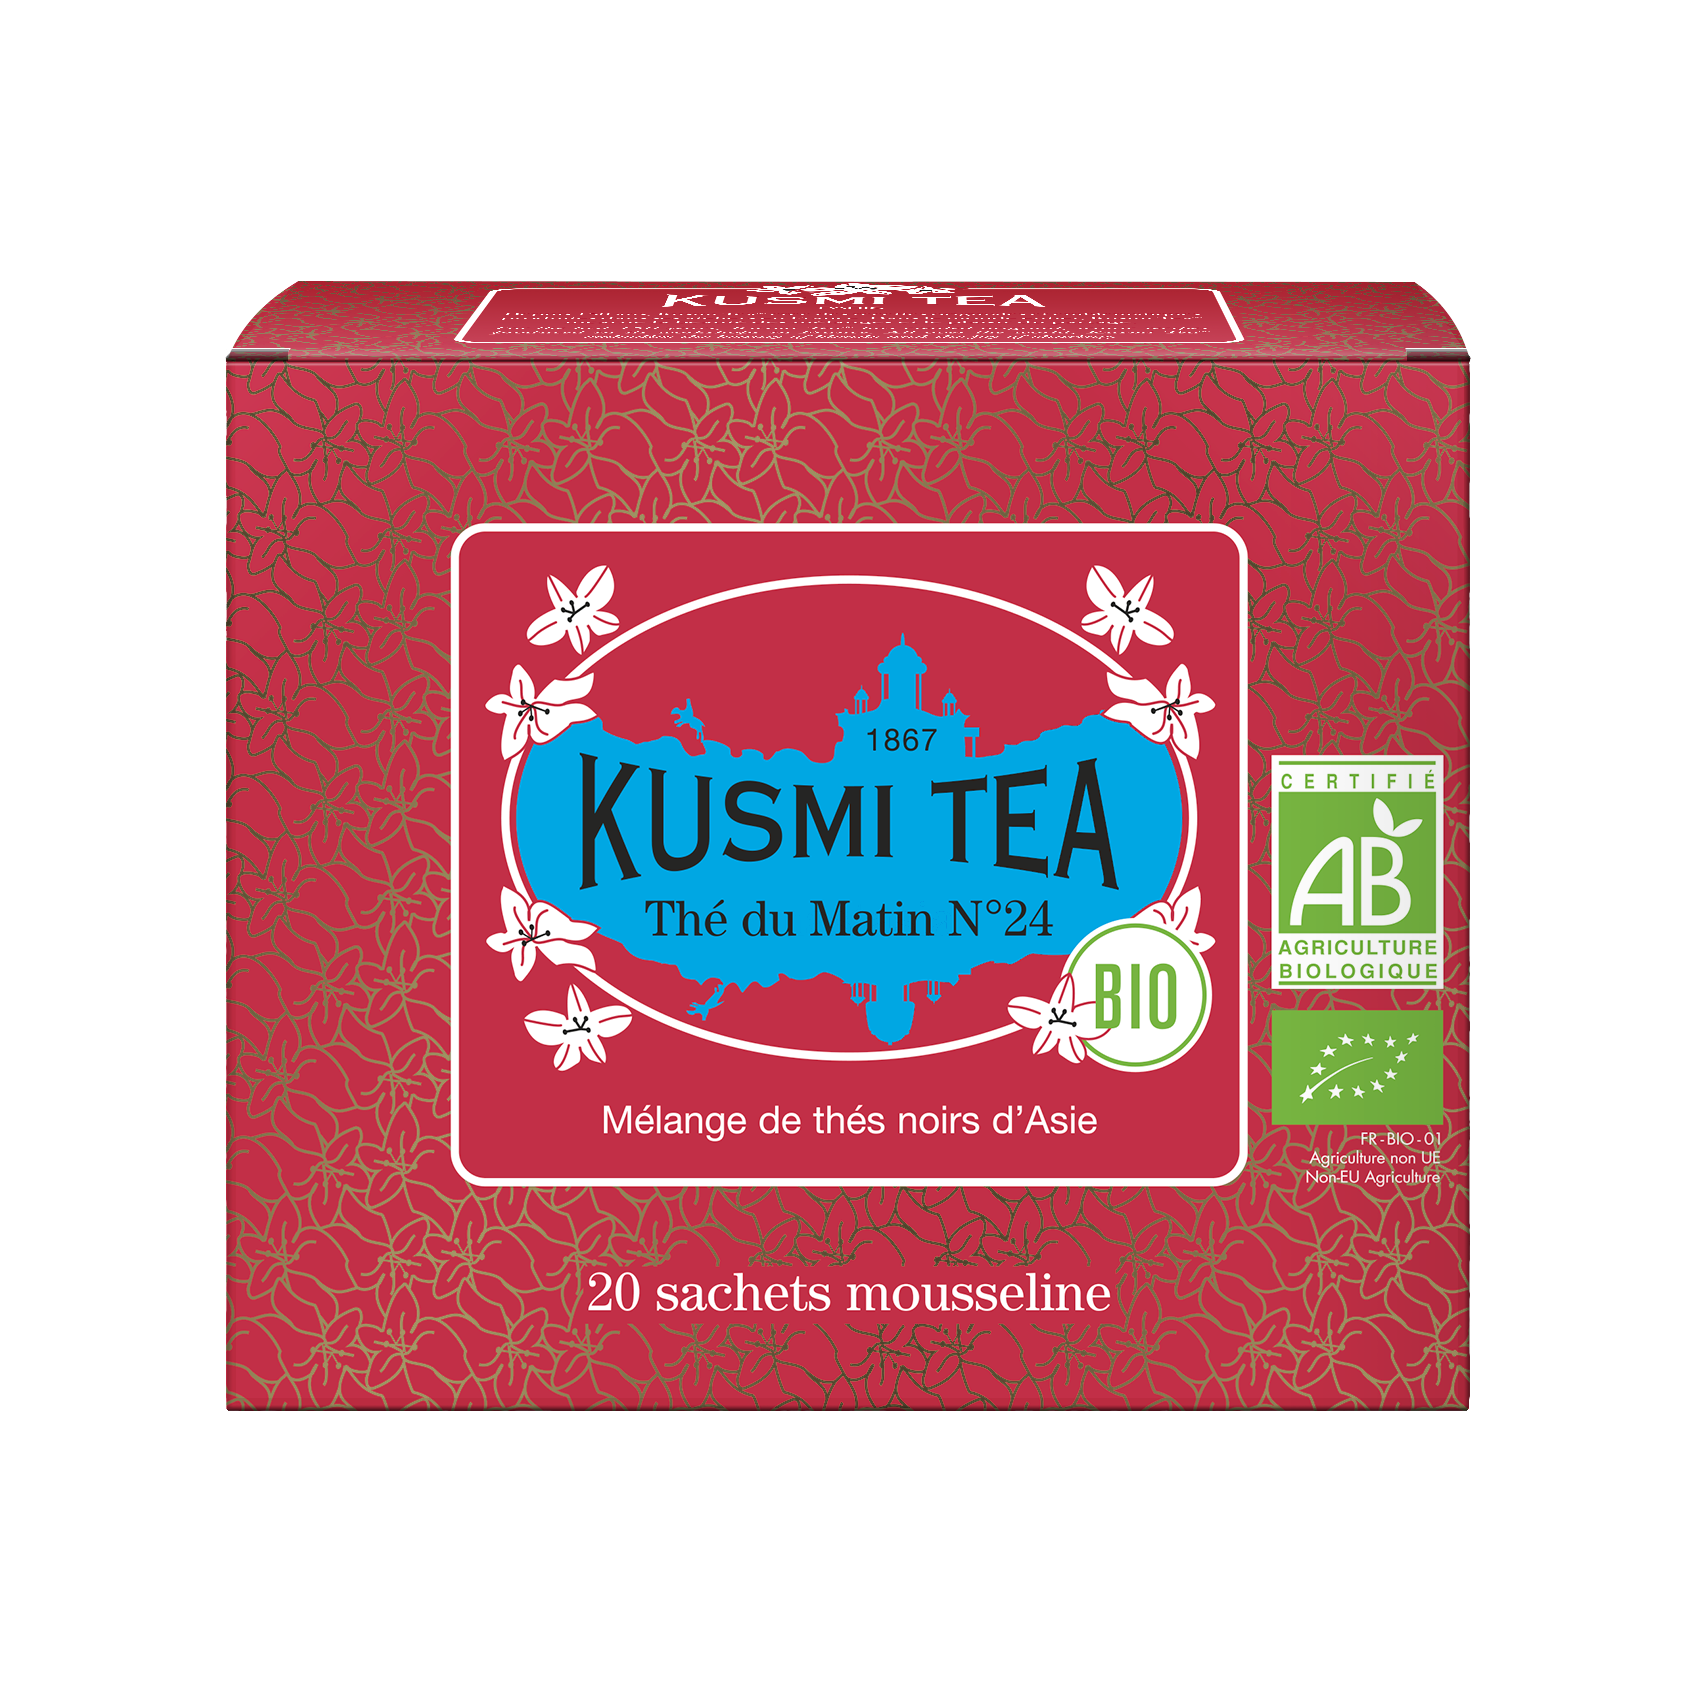 the-du-matin-n24-bio-etui-sachets-mousseline-kusmi-tea-x-20-40-g_LZpeY6W